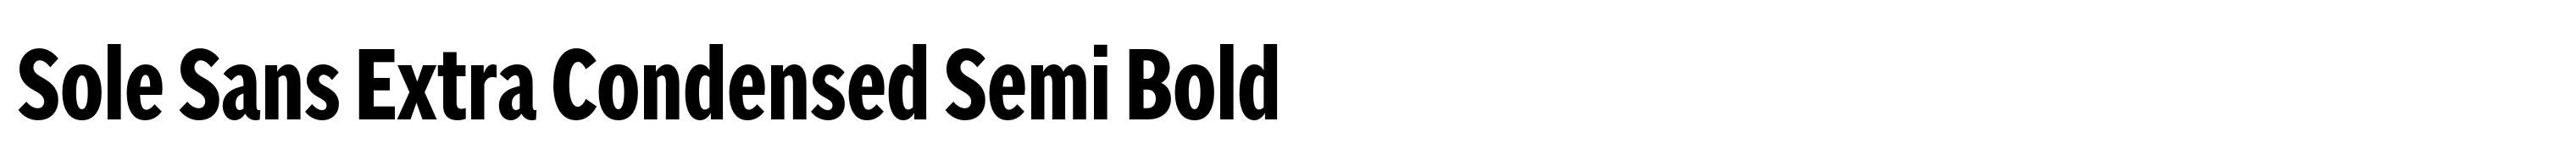 Sole Sans Extra Condensed Semi Bold